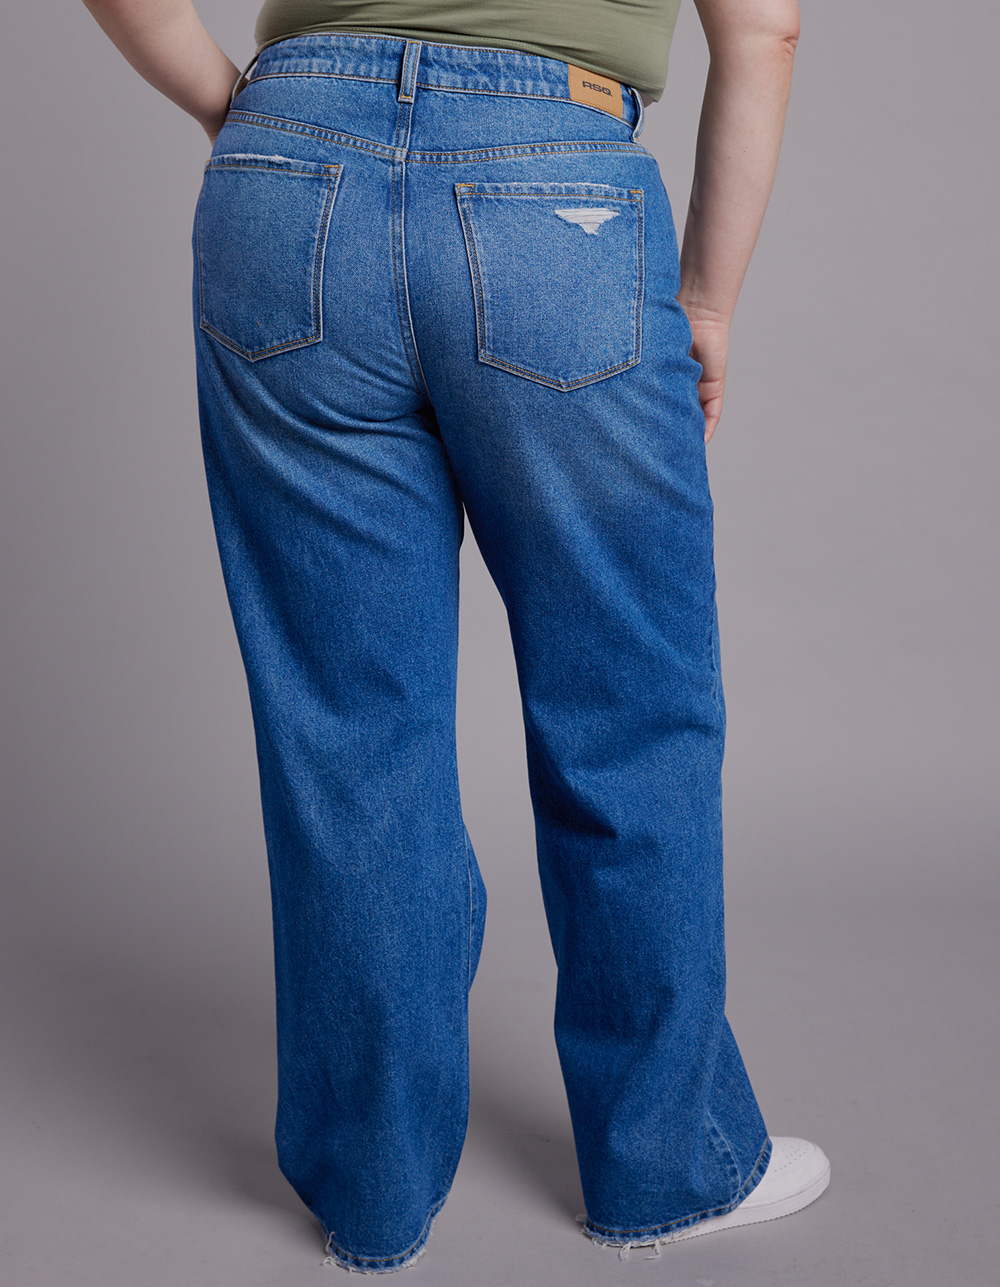 NEW RSQ Jeans Tan Brown Manhattan High Rise Size 7/28 - beyond exchange